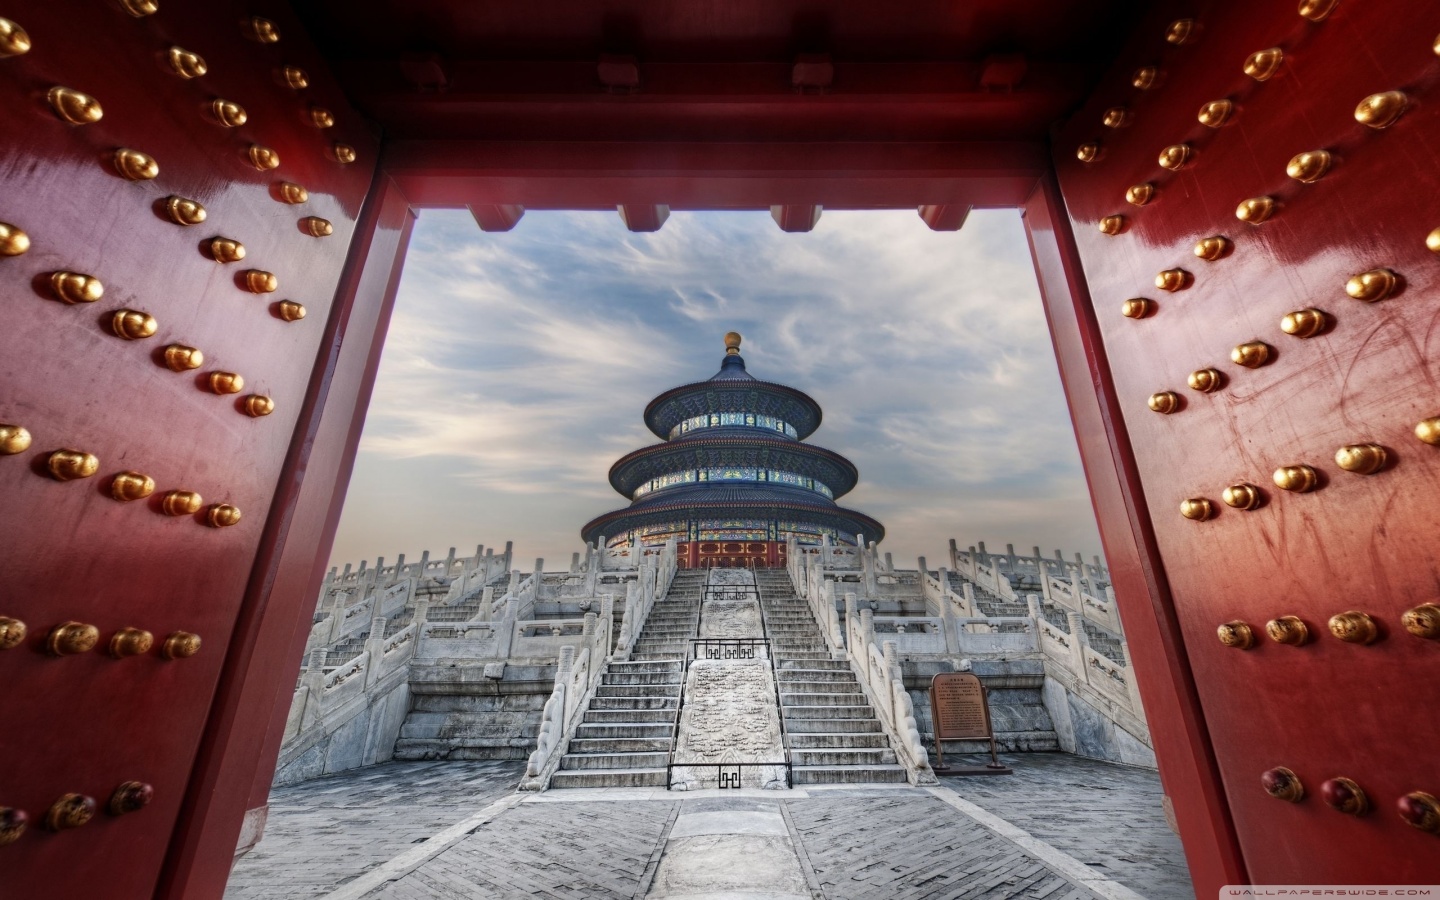  Misz masz - temple_of_heaven_beijing_china-wallpaper-1440x900.jpg